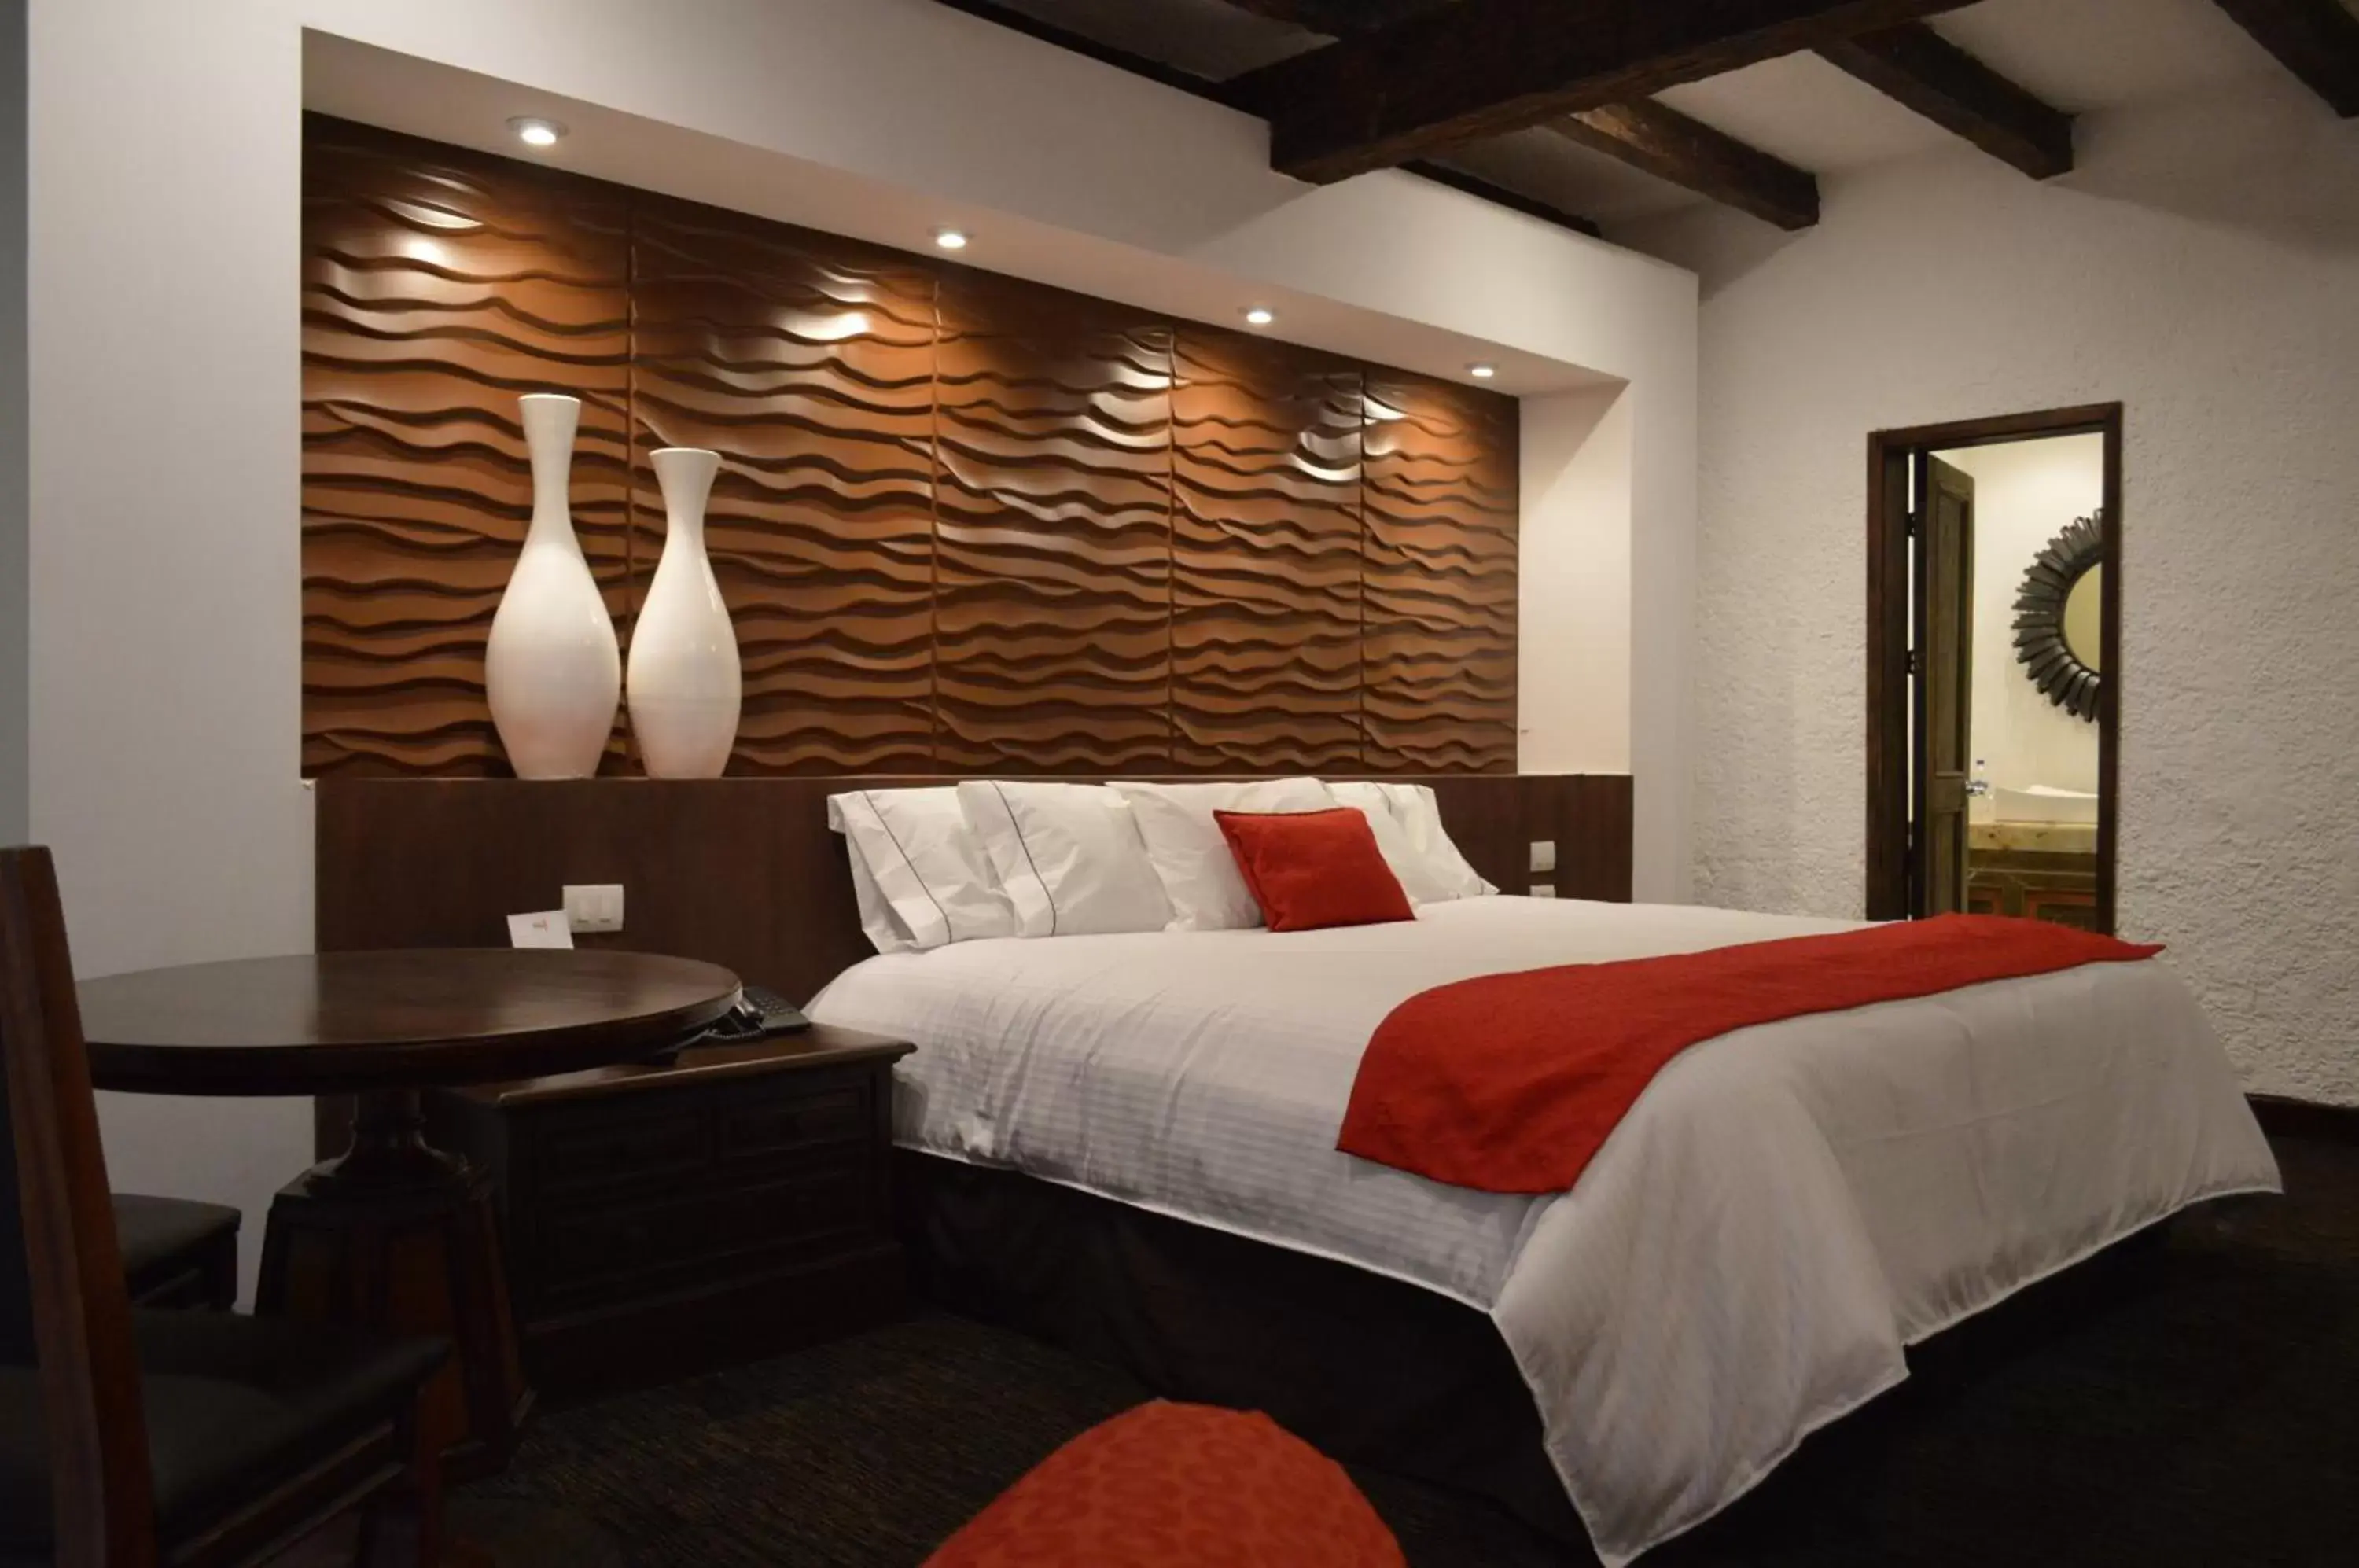 Bed, Room Photo in Radisson Hotel Tapatio Guadalajara